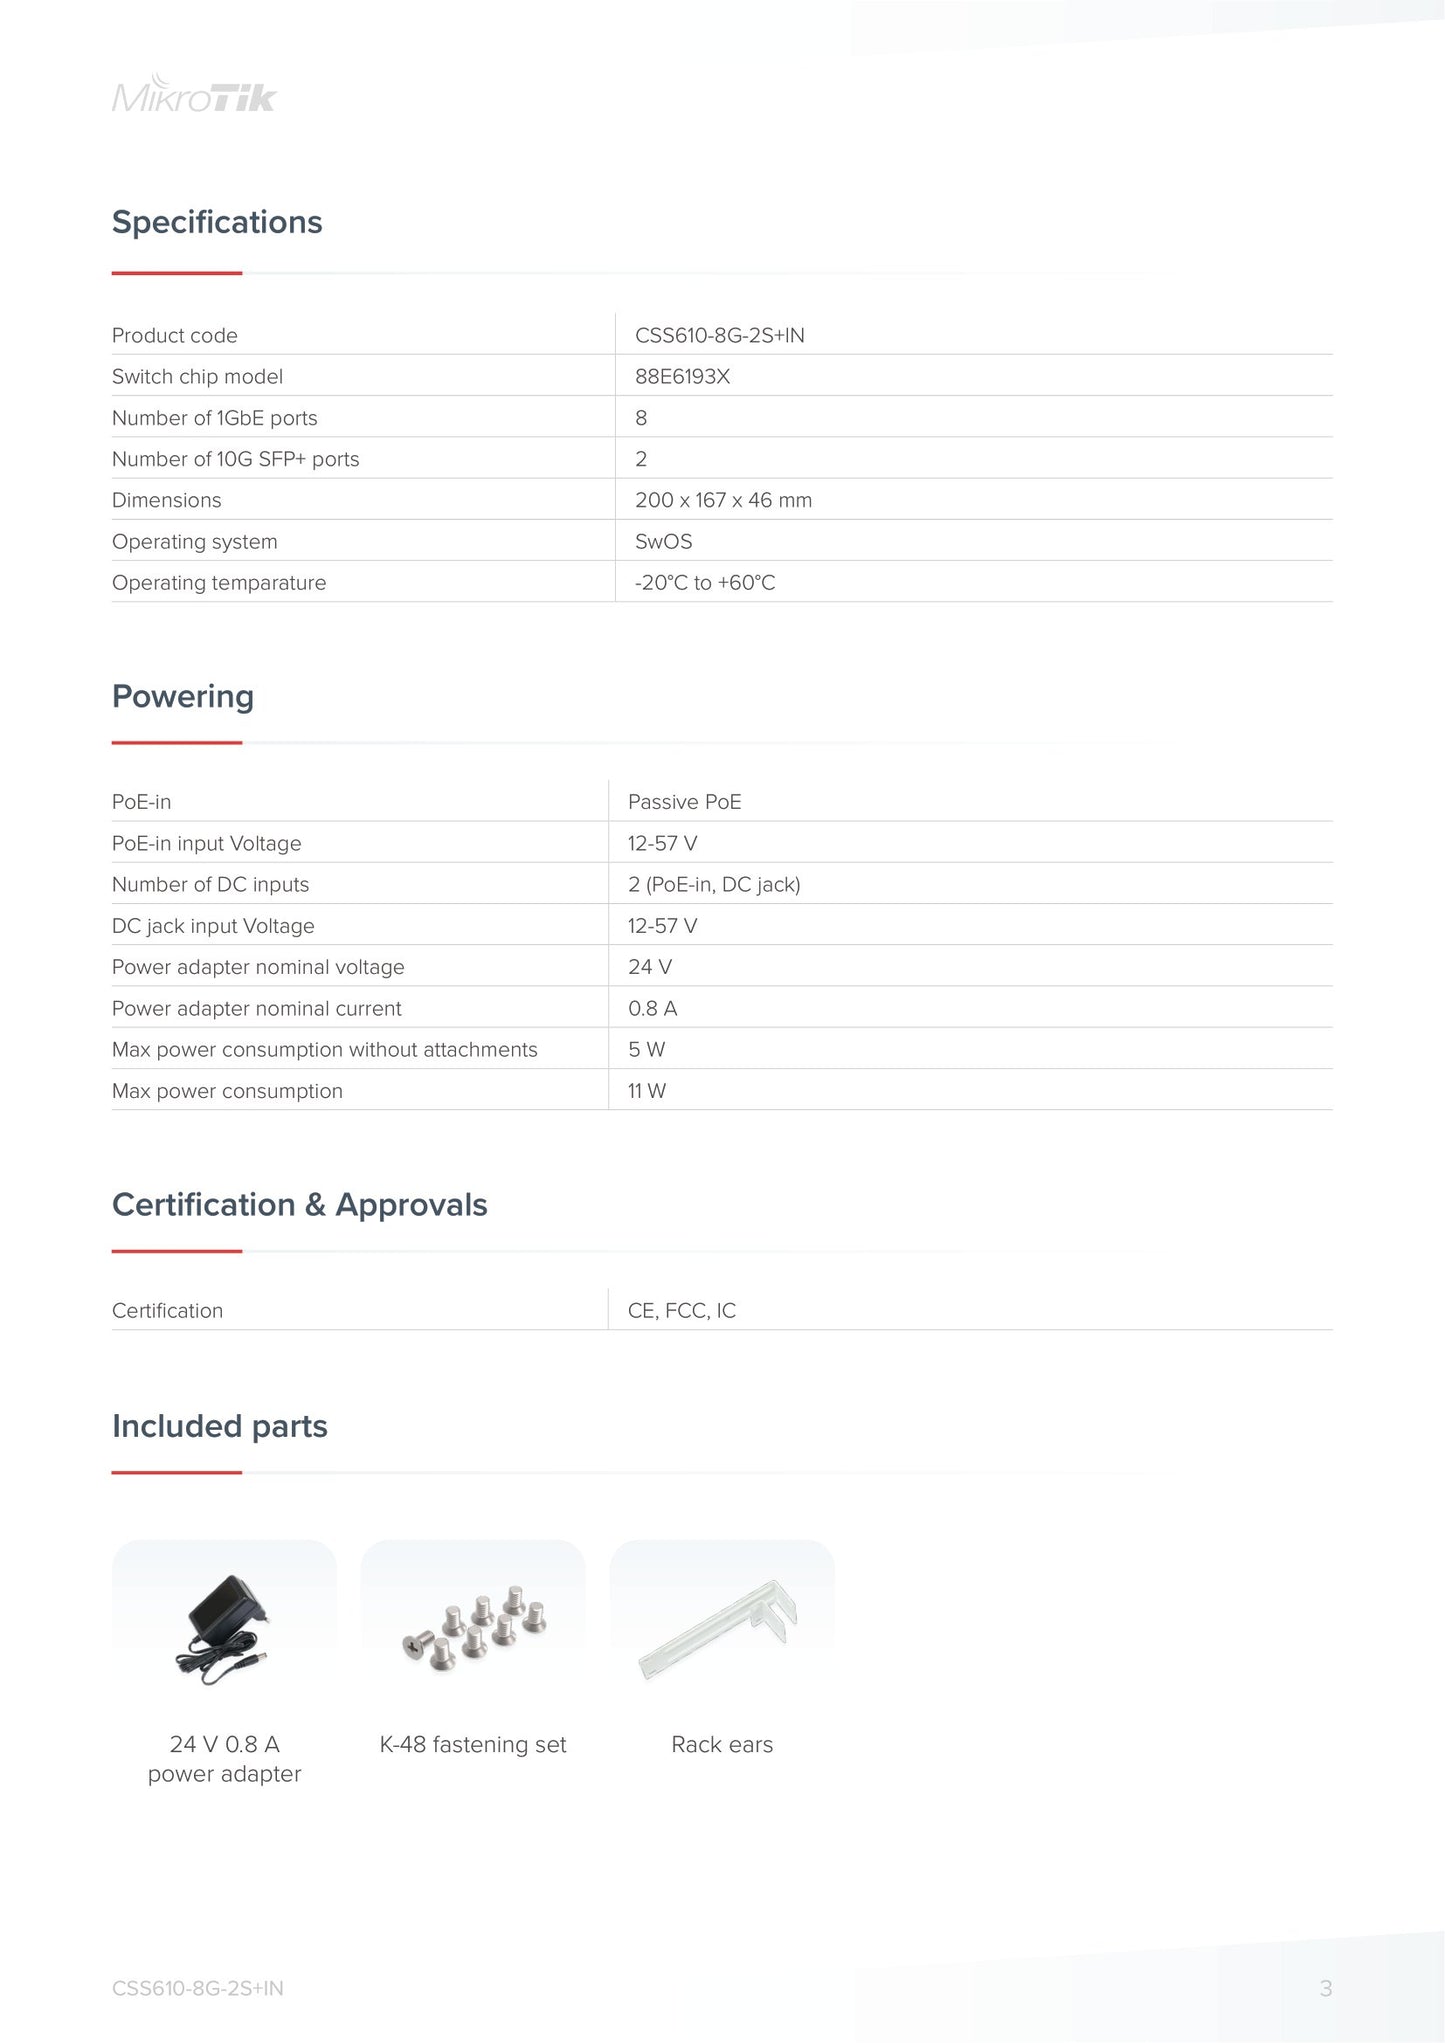 MikroTik SwOS Smart Switch 8 Port Gigabit 2SFP+ PoE Input | CSS610-8G-2S+IN